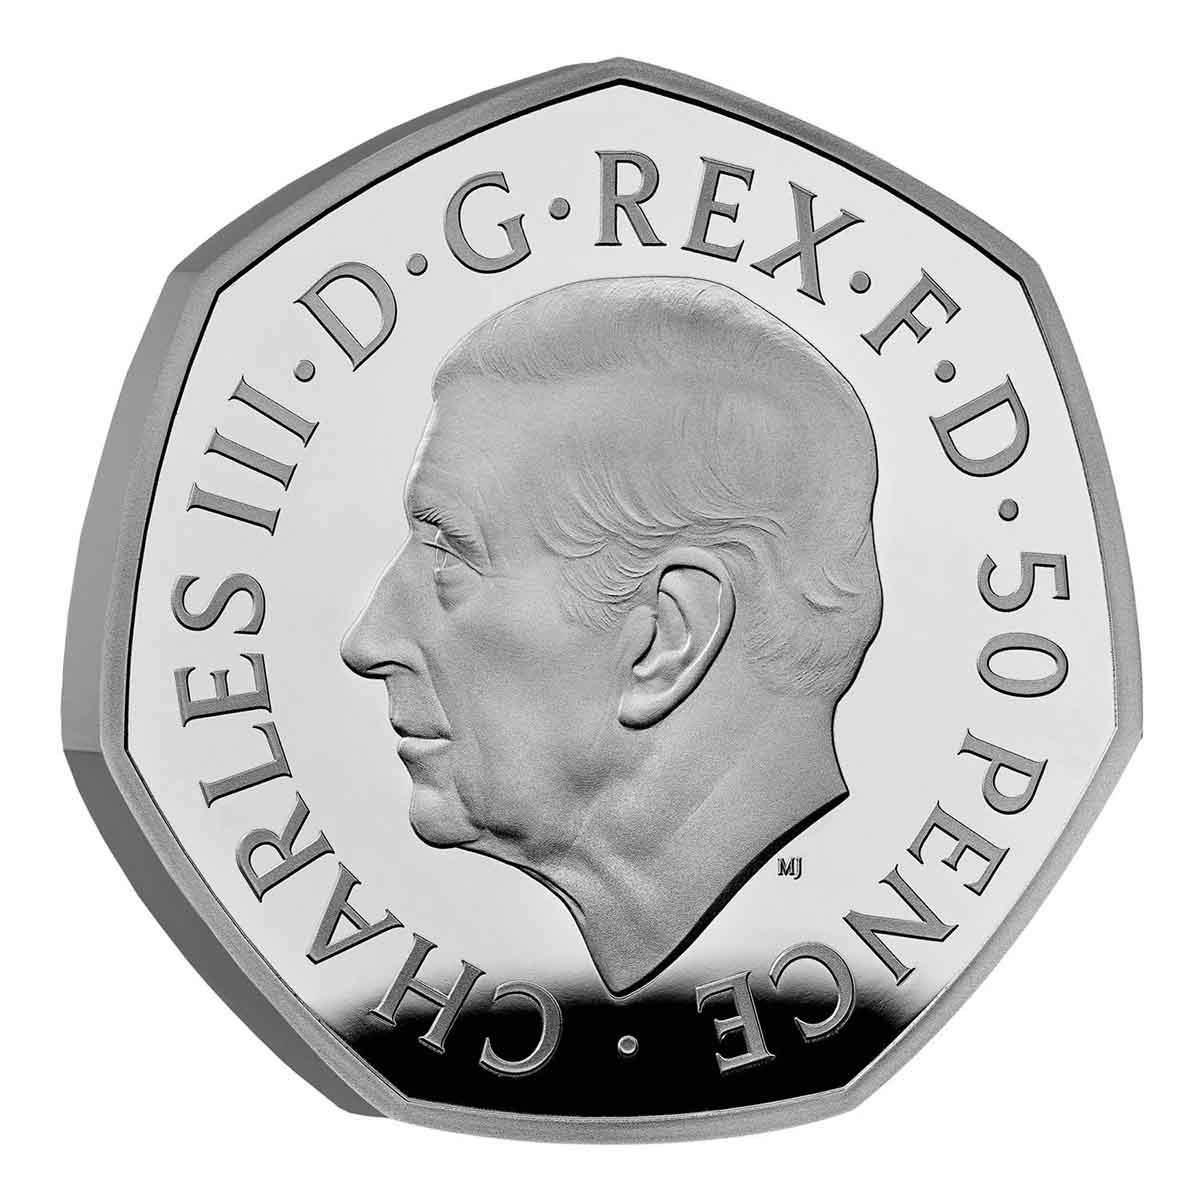 King Charles III 2022 50p Queen Elizabeth II Tribute Silver Proof Coin